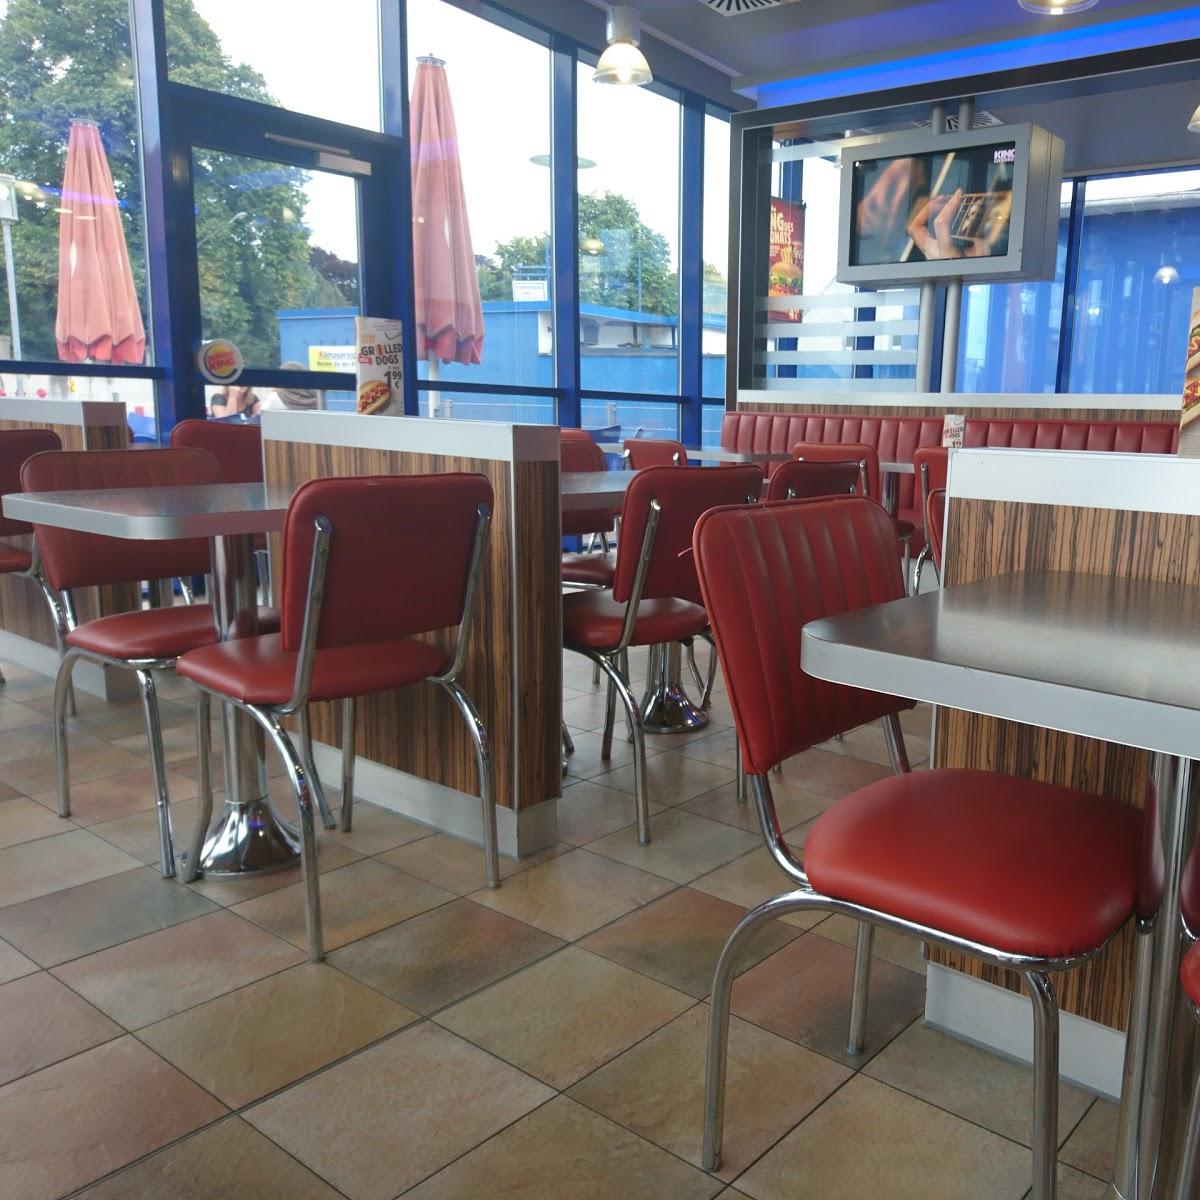 Restaurant "Burger King" in Moers